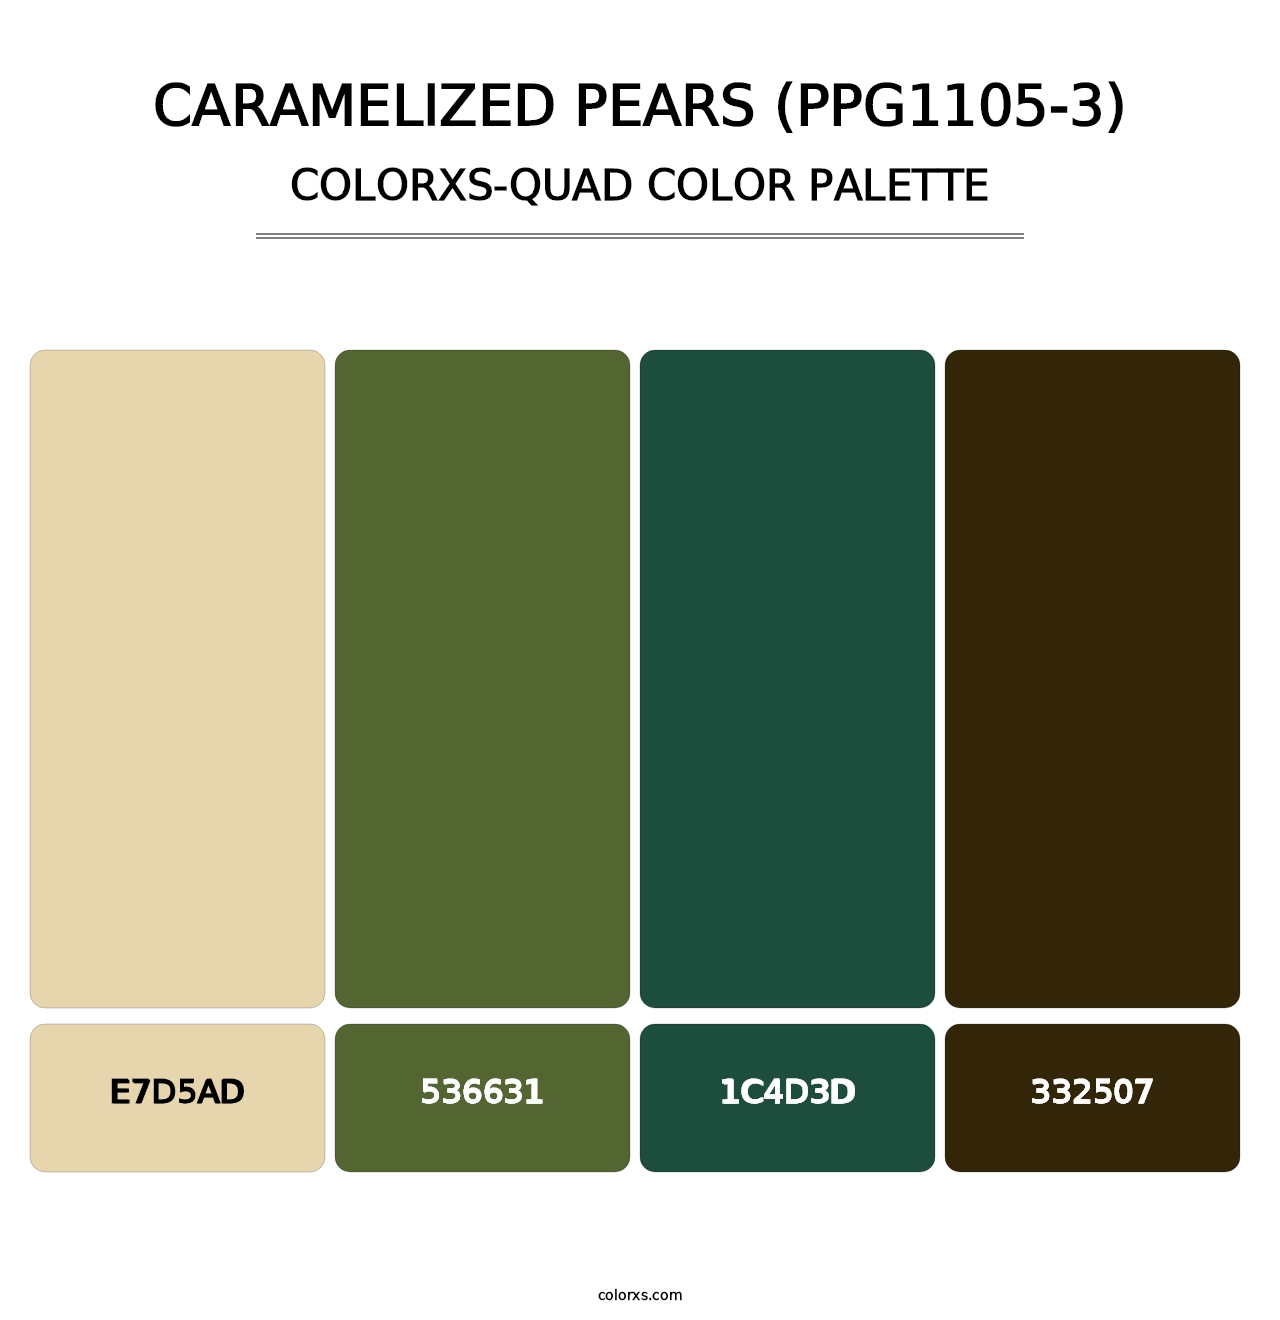 Caramelized Pears (PPG1105-3) - Colorxs Quad Palette